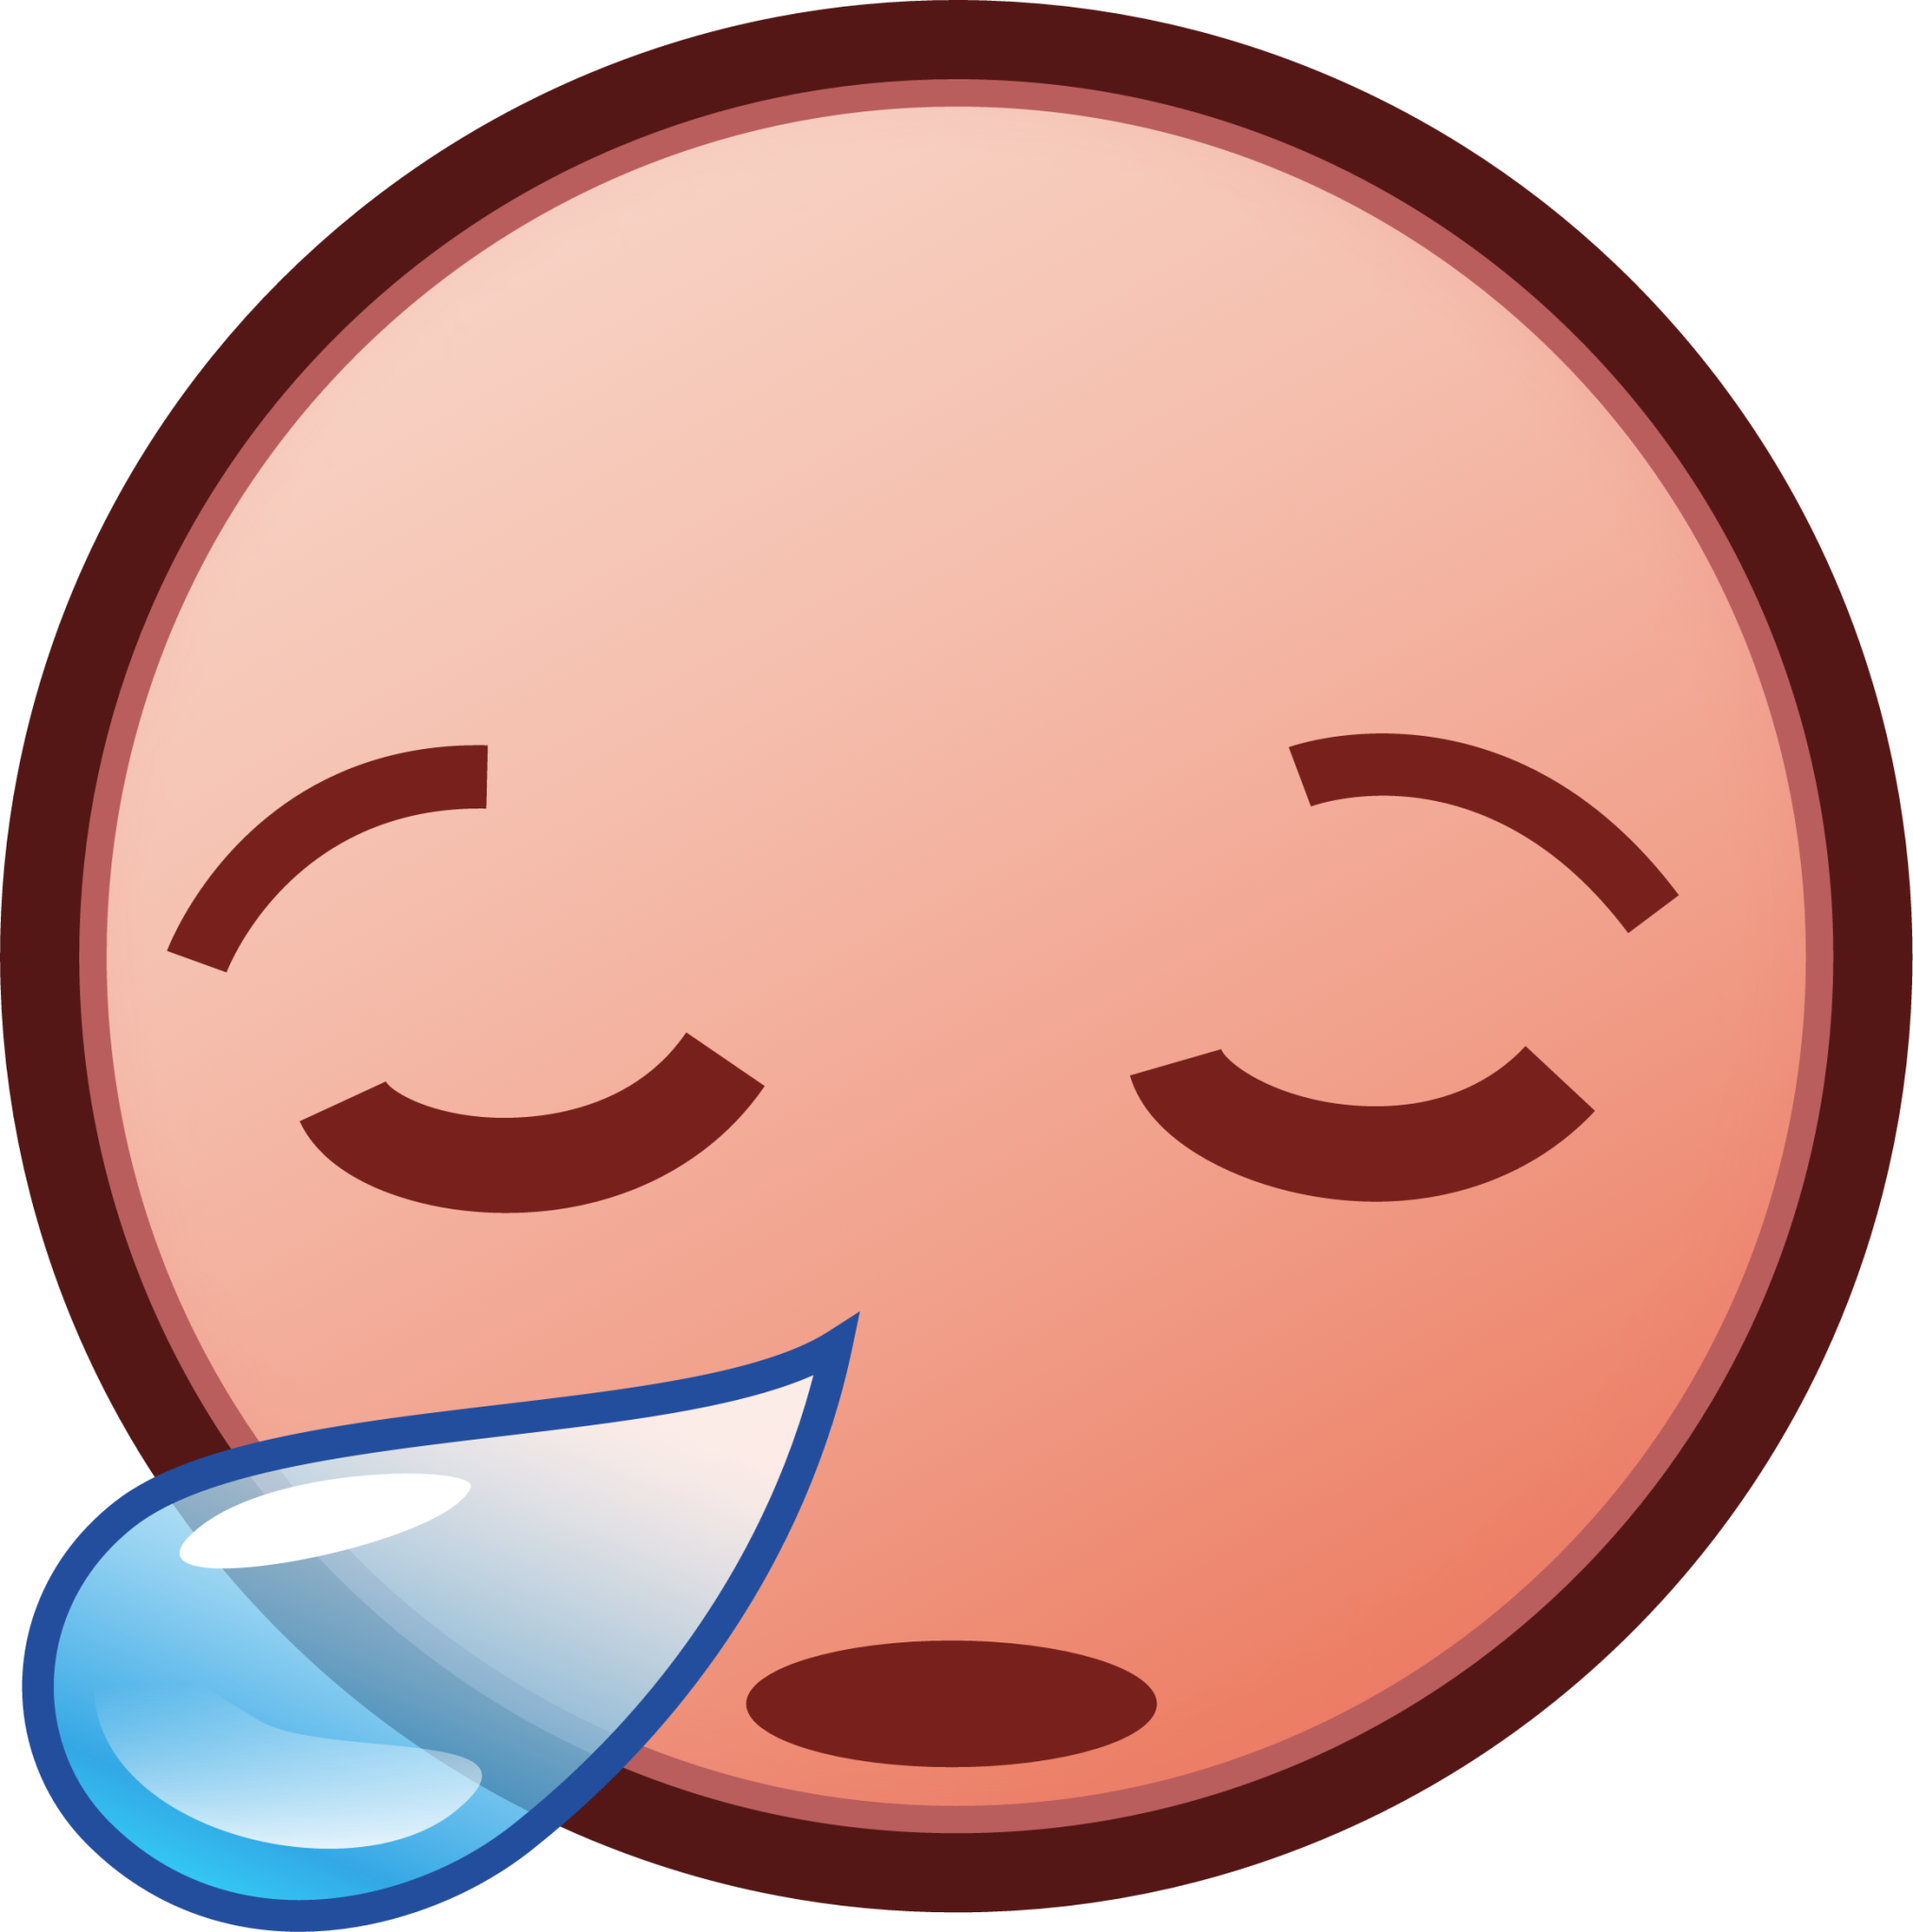 sleepy (plain) emoji